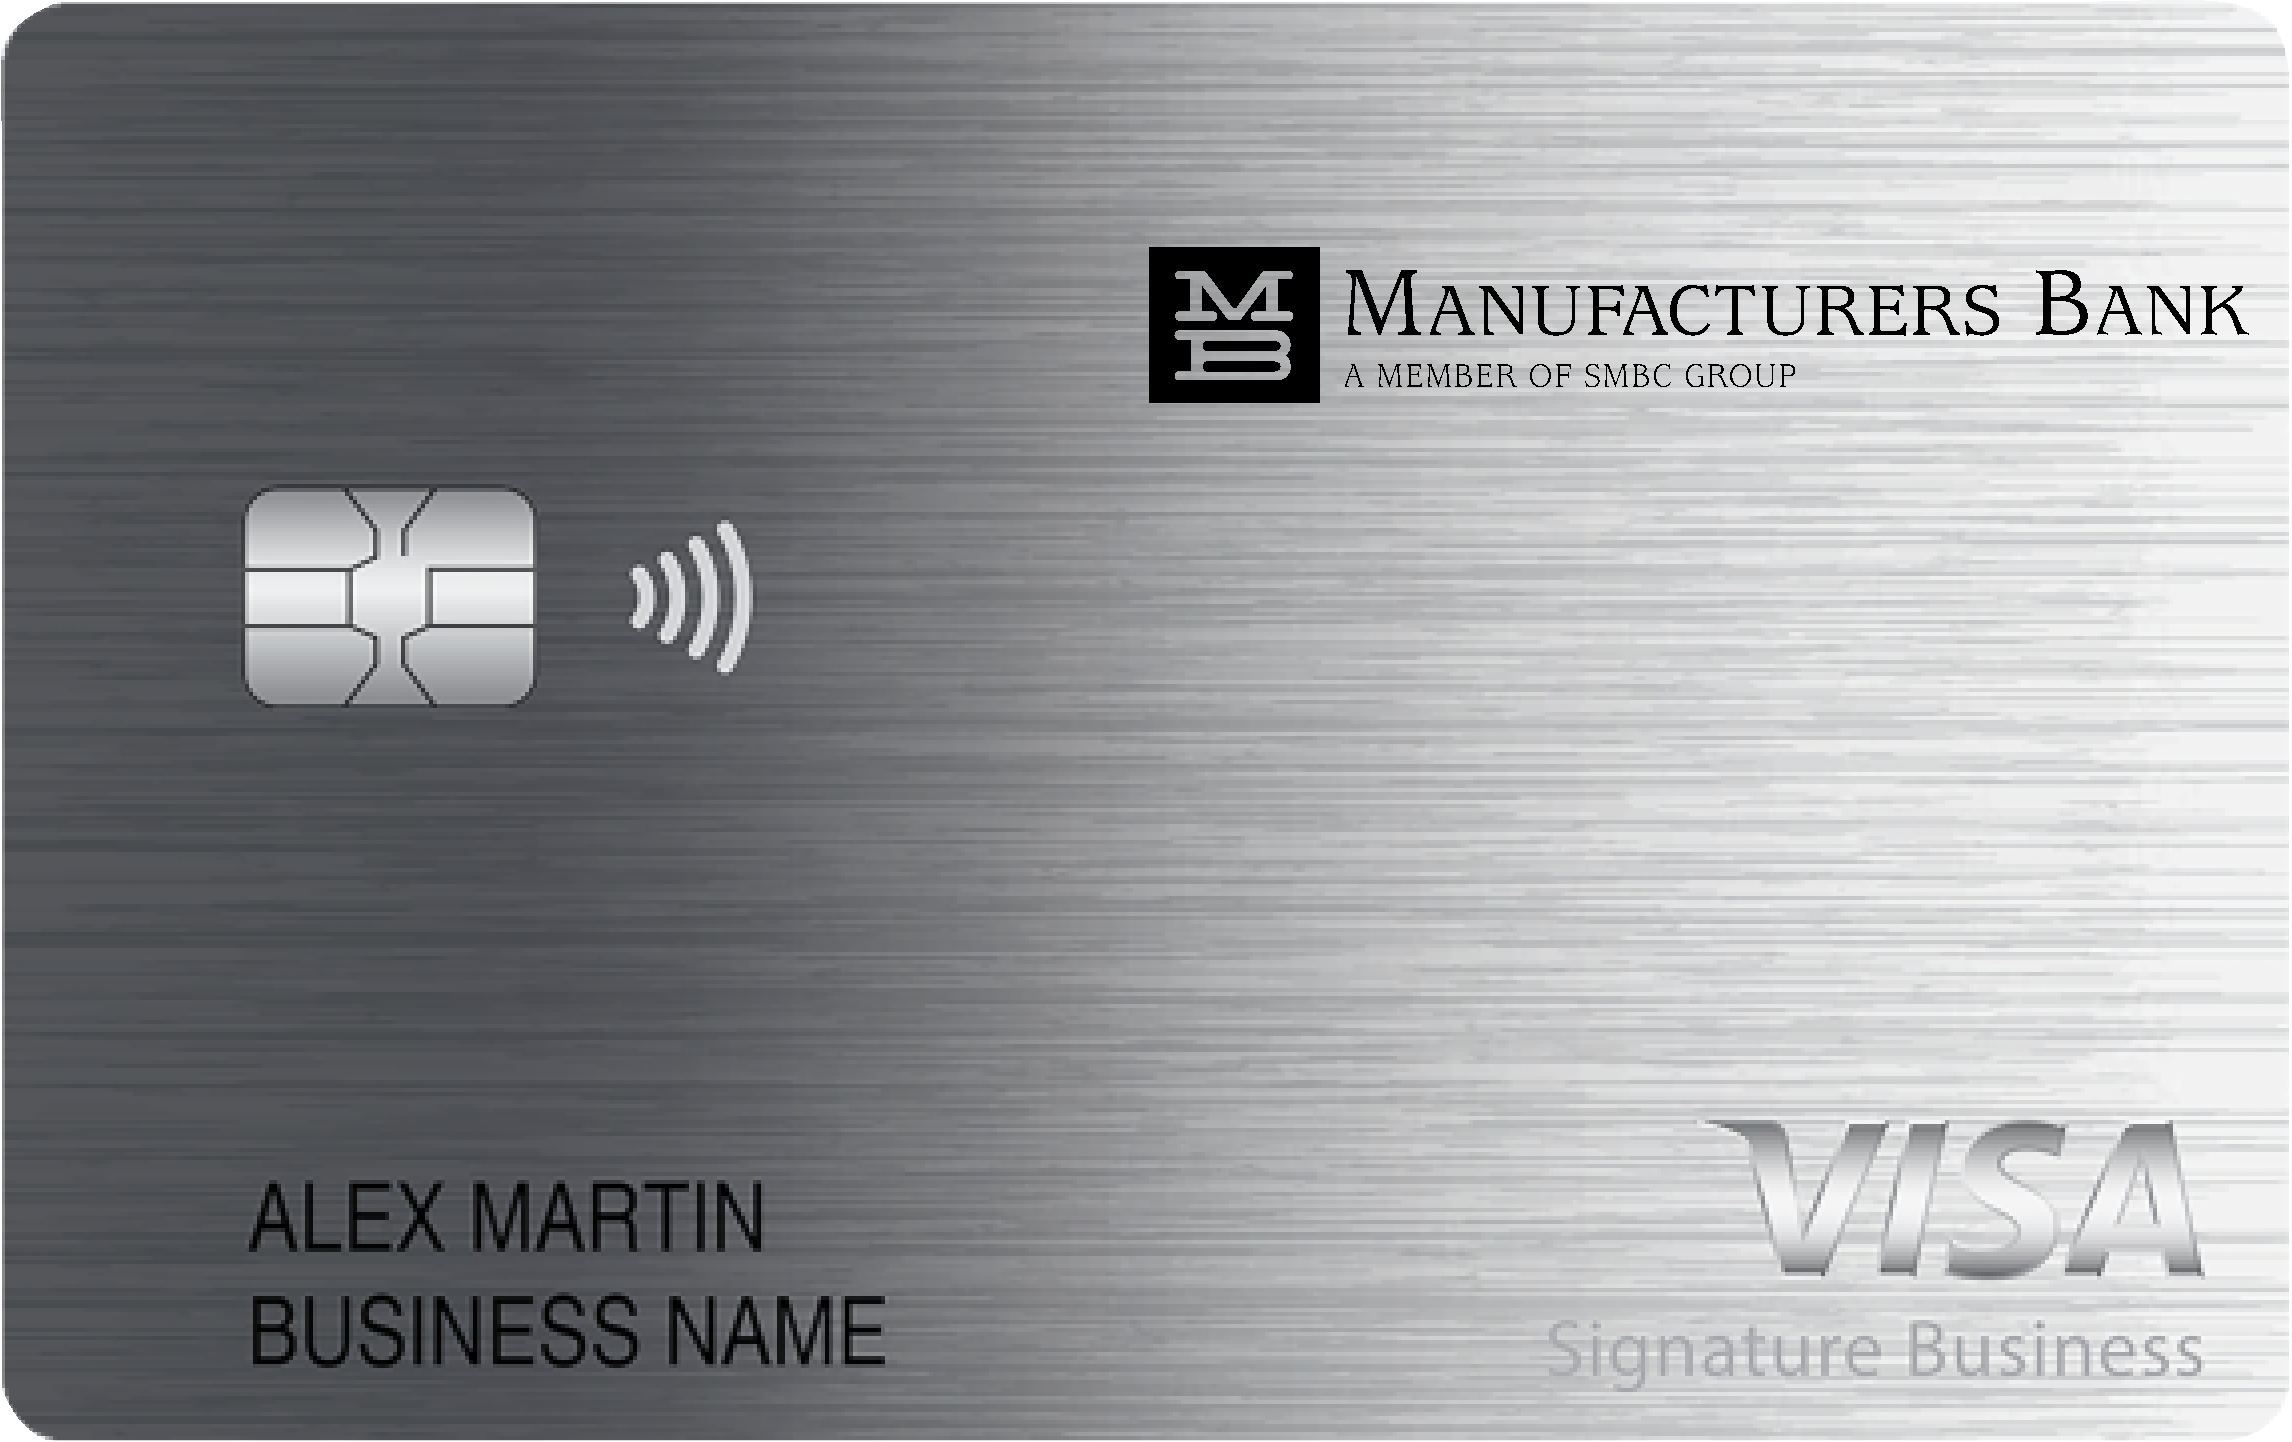 Manufacturers Bank Smart Business Rewards Card